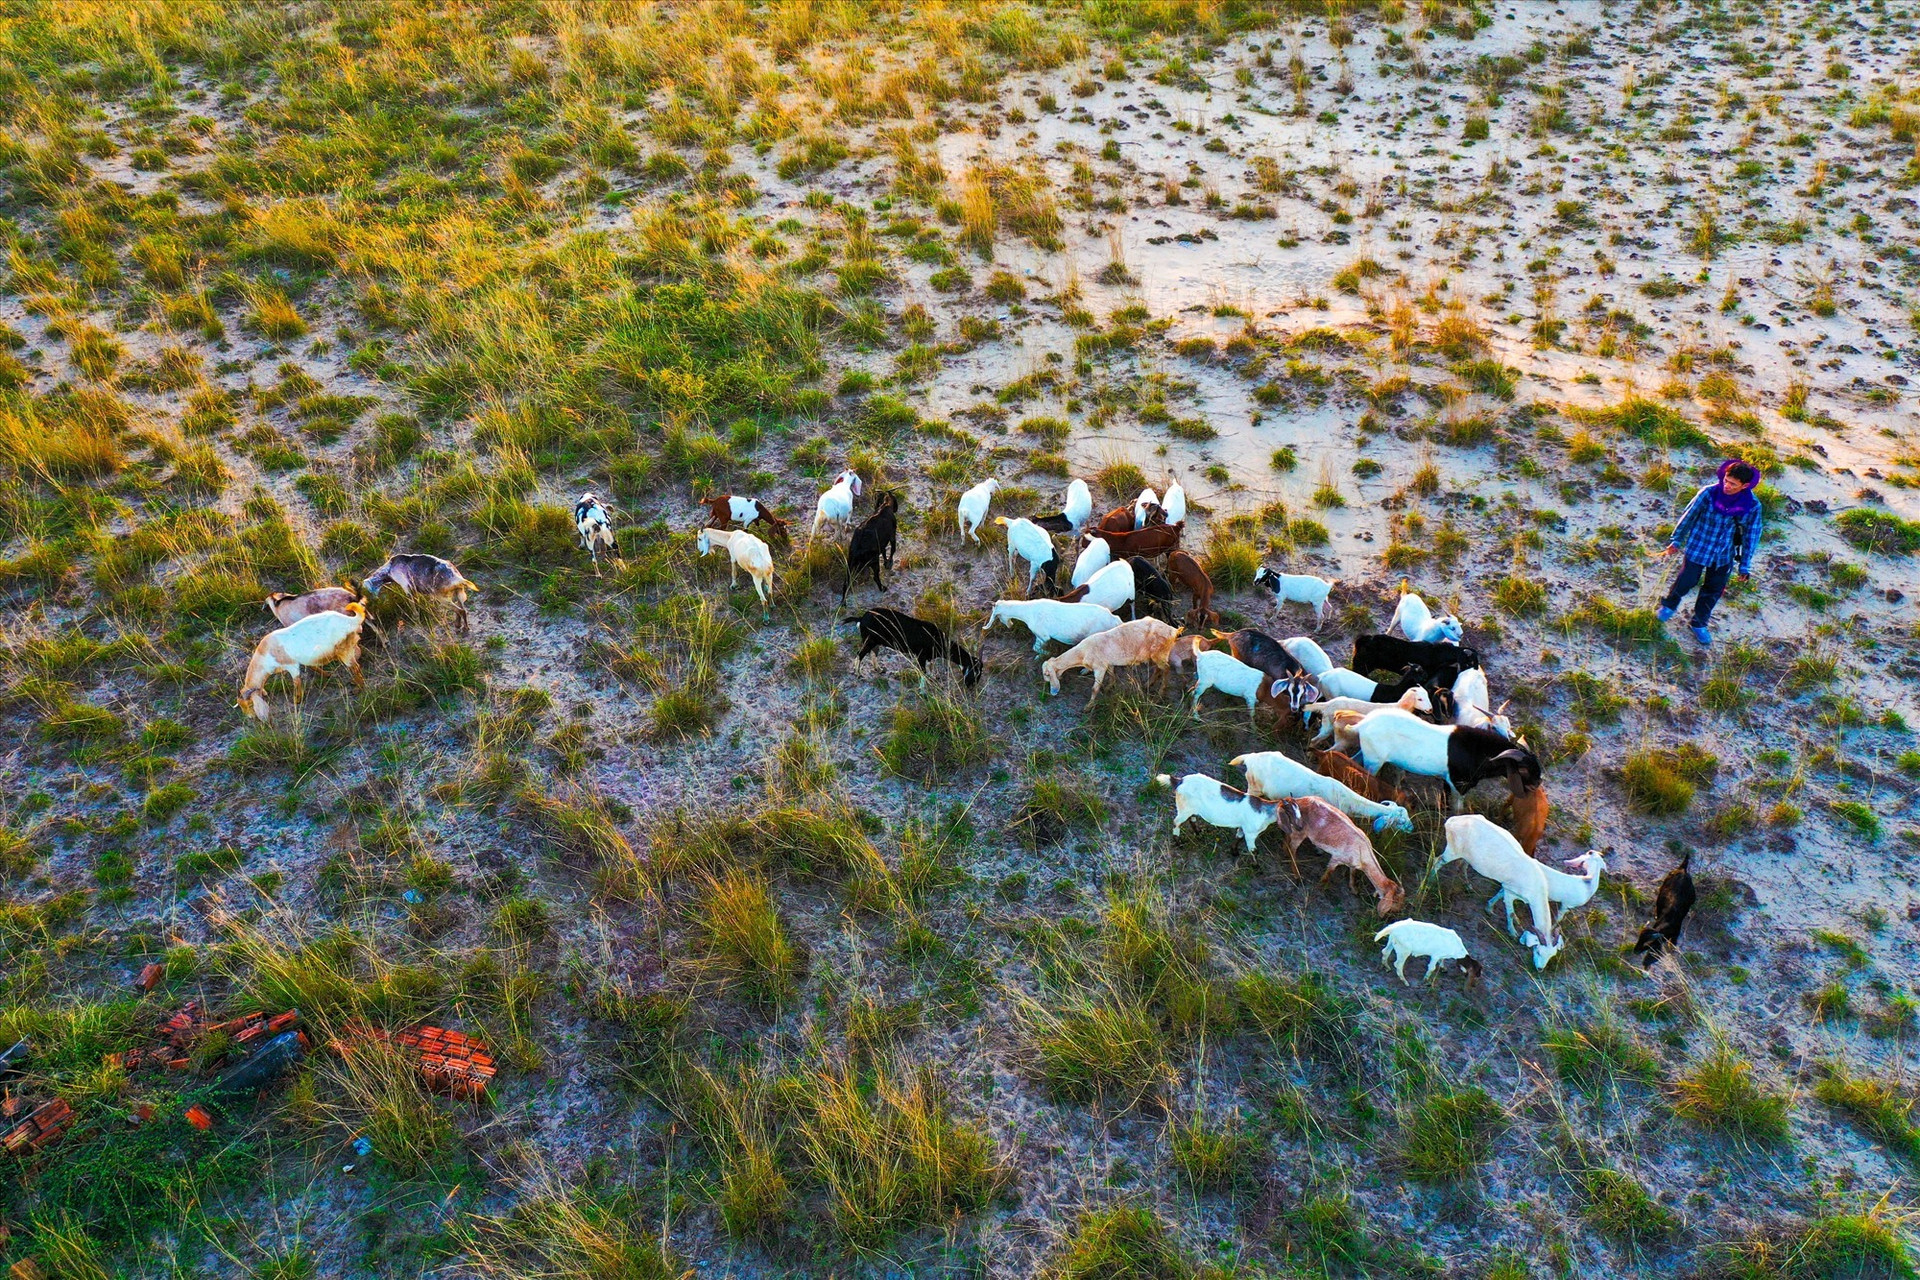 People graze herds of goats here